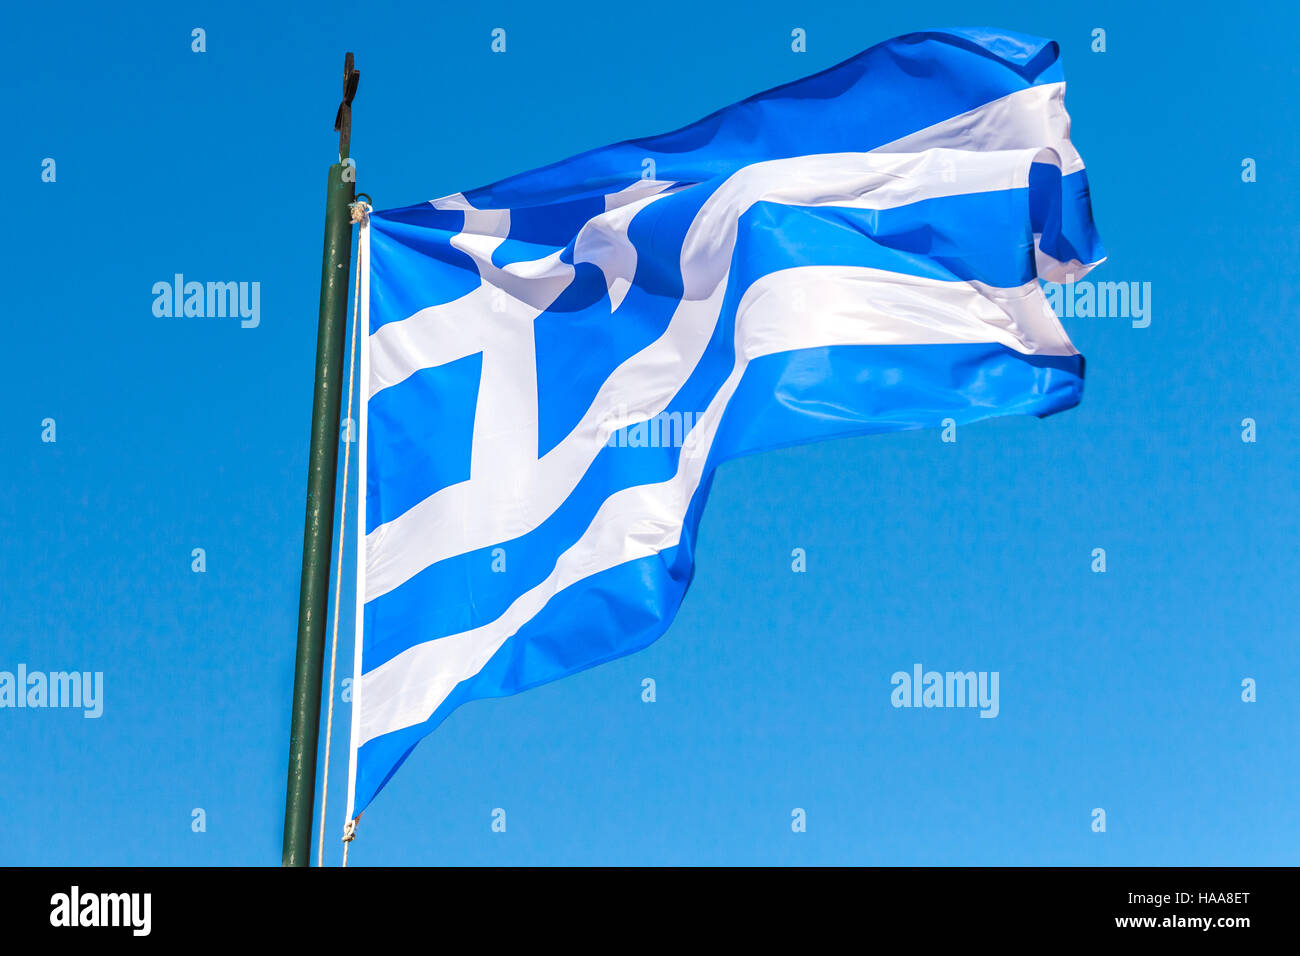 Flag of Greece wavin gover blue sky background Stock Photo